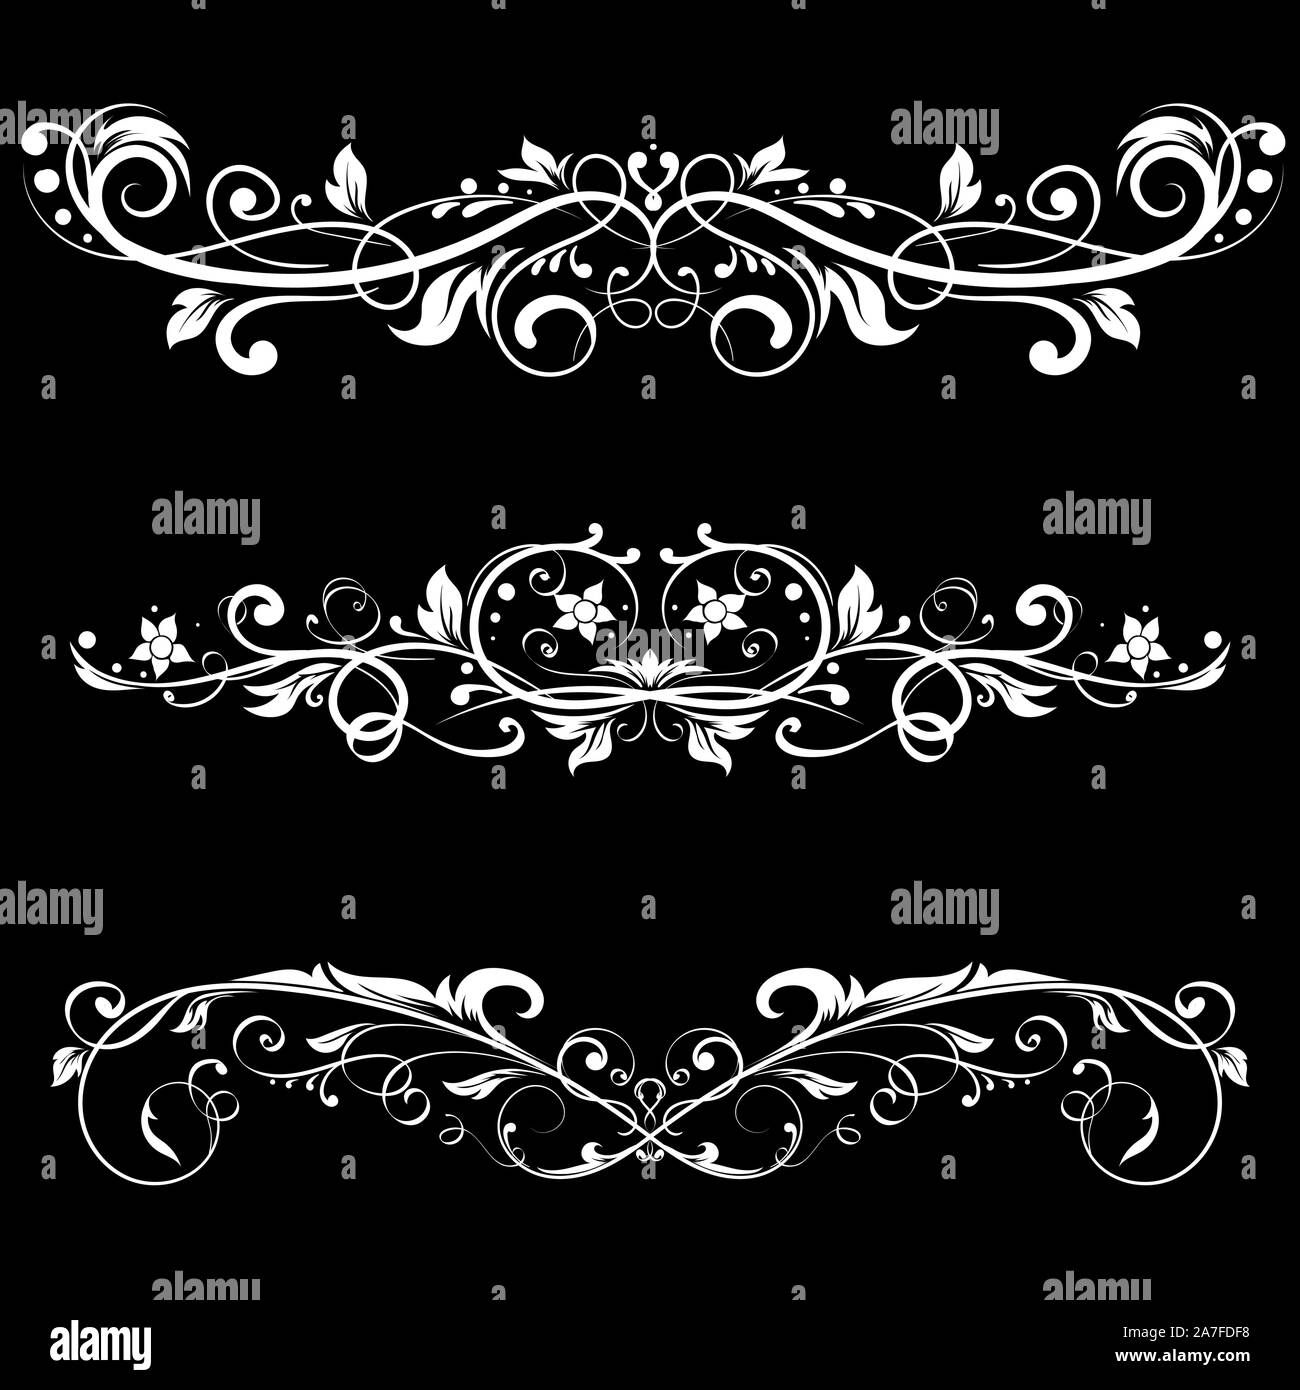 Ornamental dividers. Decorative filigree design elements on black background Stock Vector